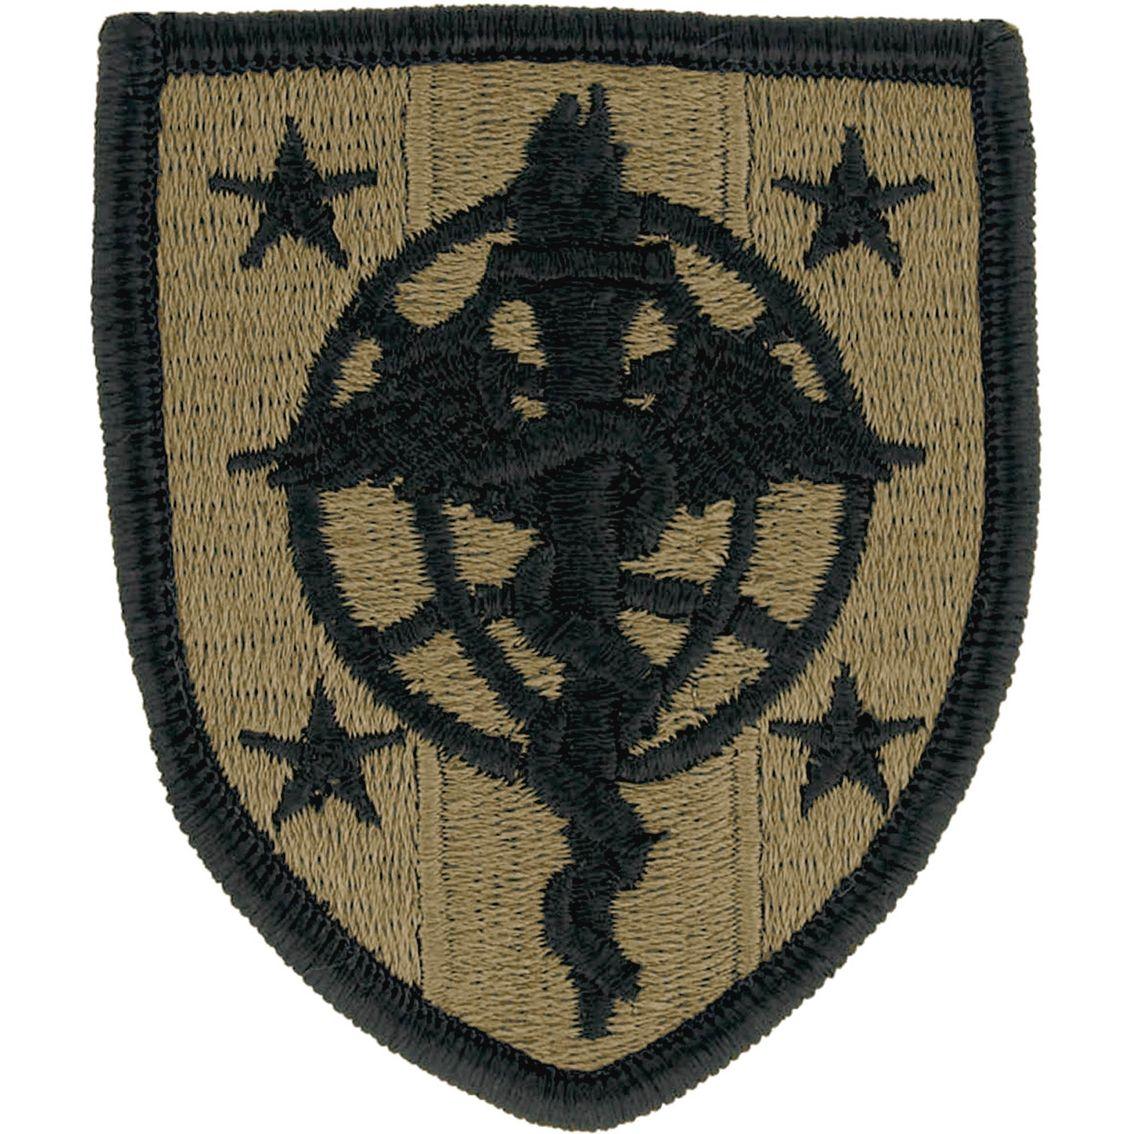 Usuhs Logo - Army Unit Patch Uniformed Services University Of Health Sciences